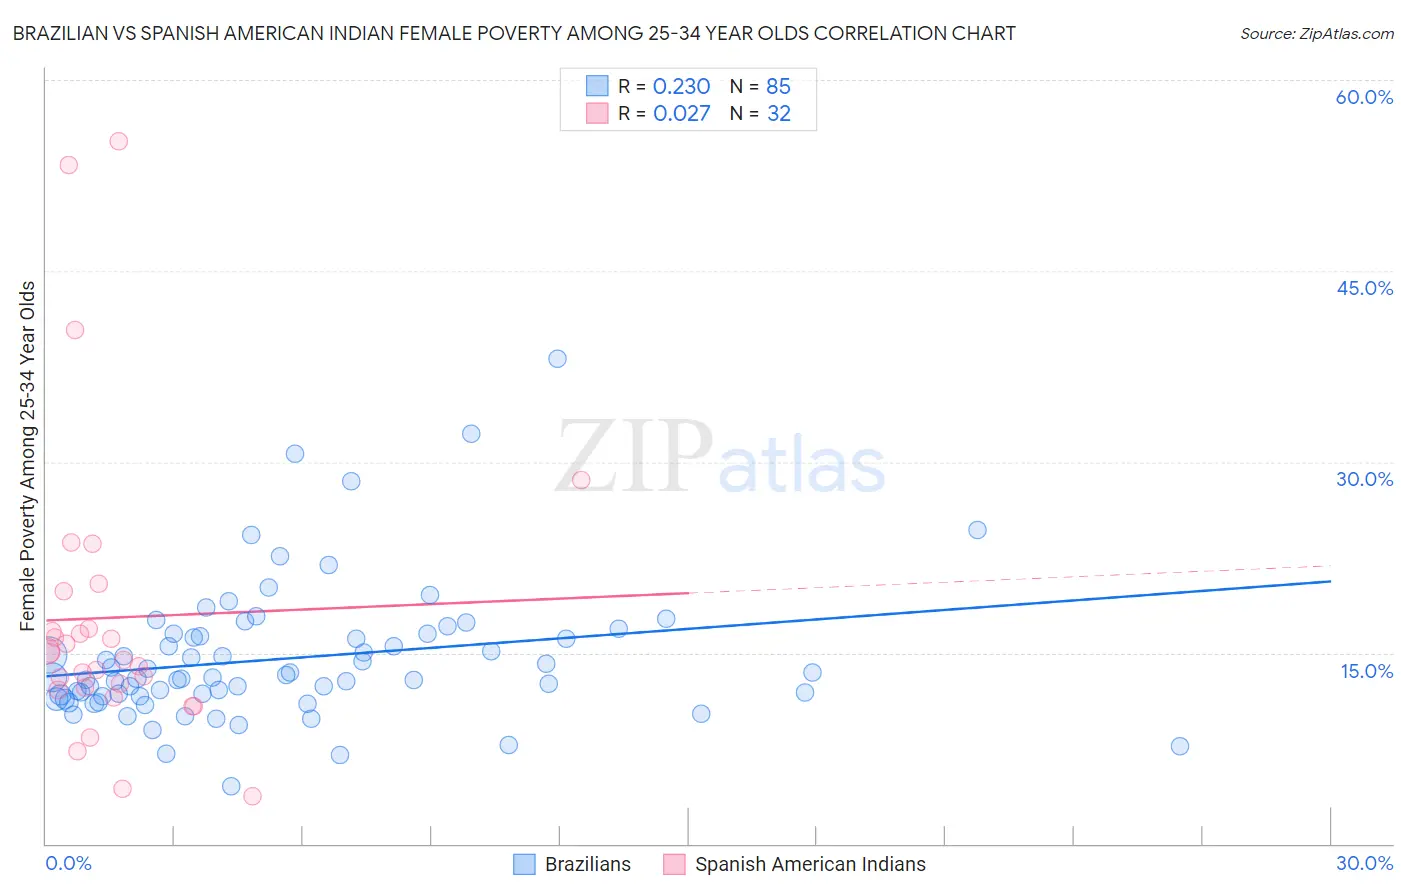 Brazilian vs Spanish American Indian Female Poverty Among 25-34 Year Olds